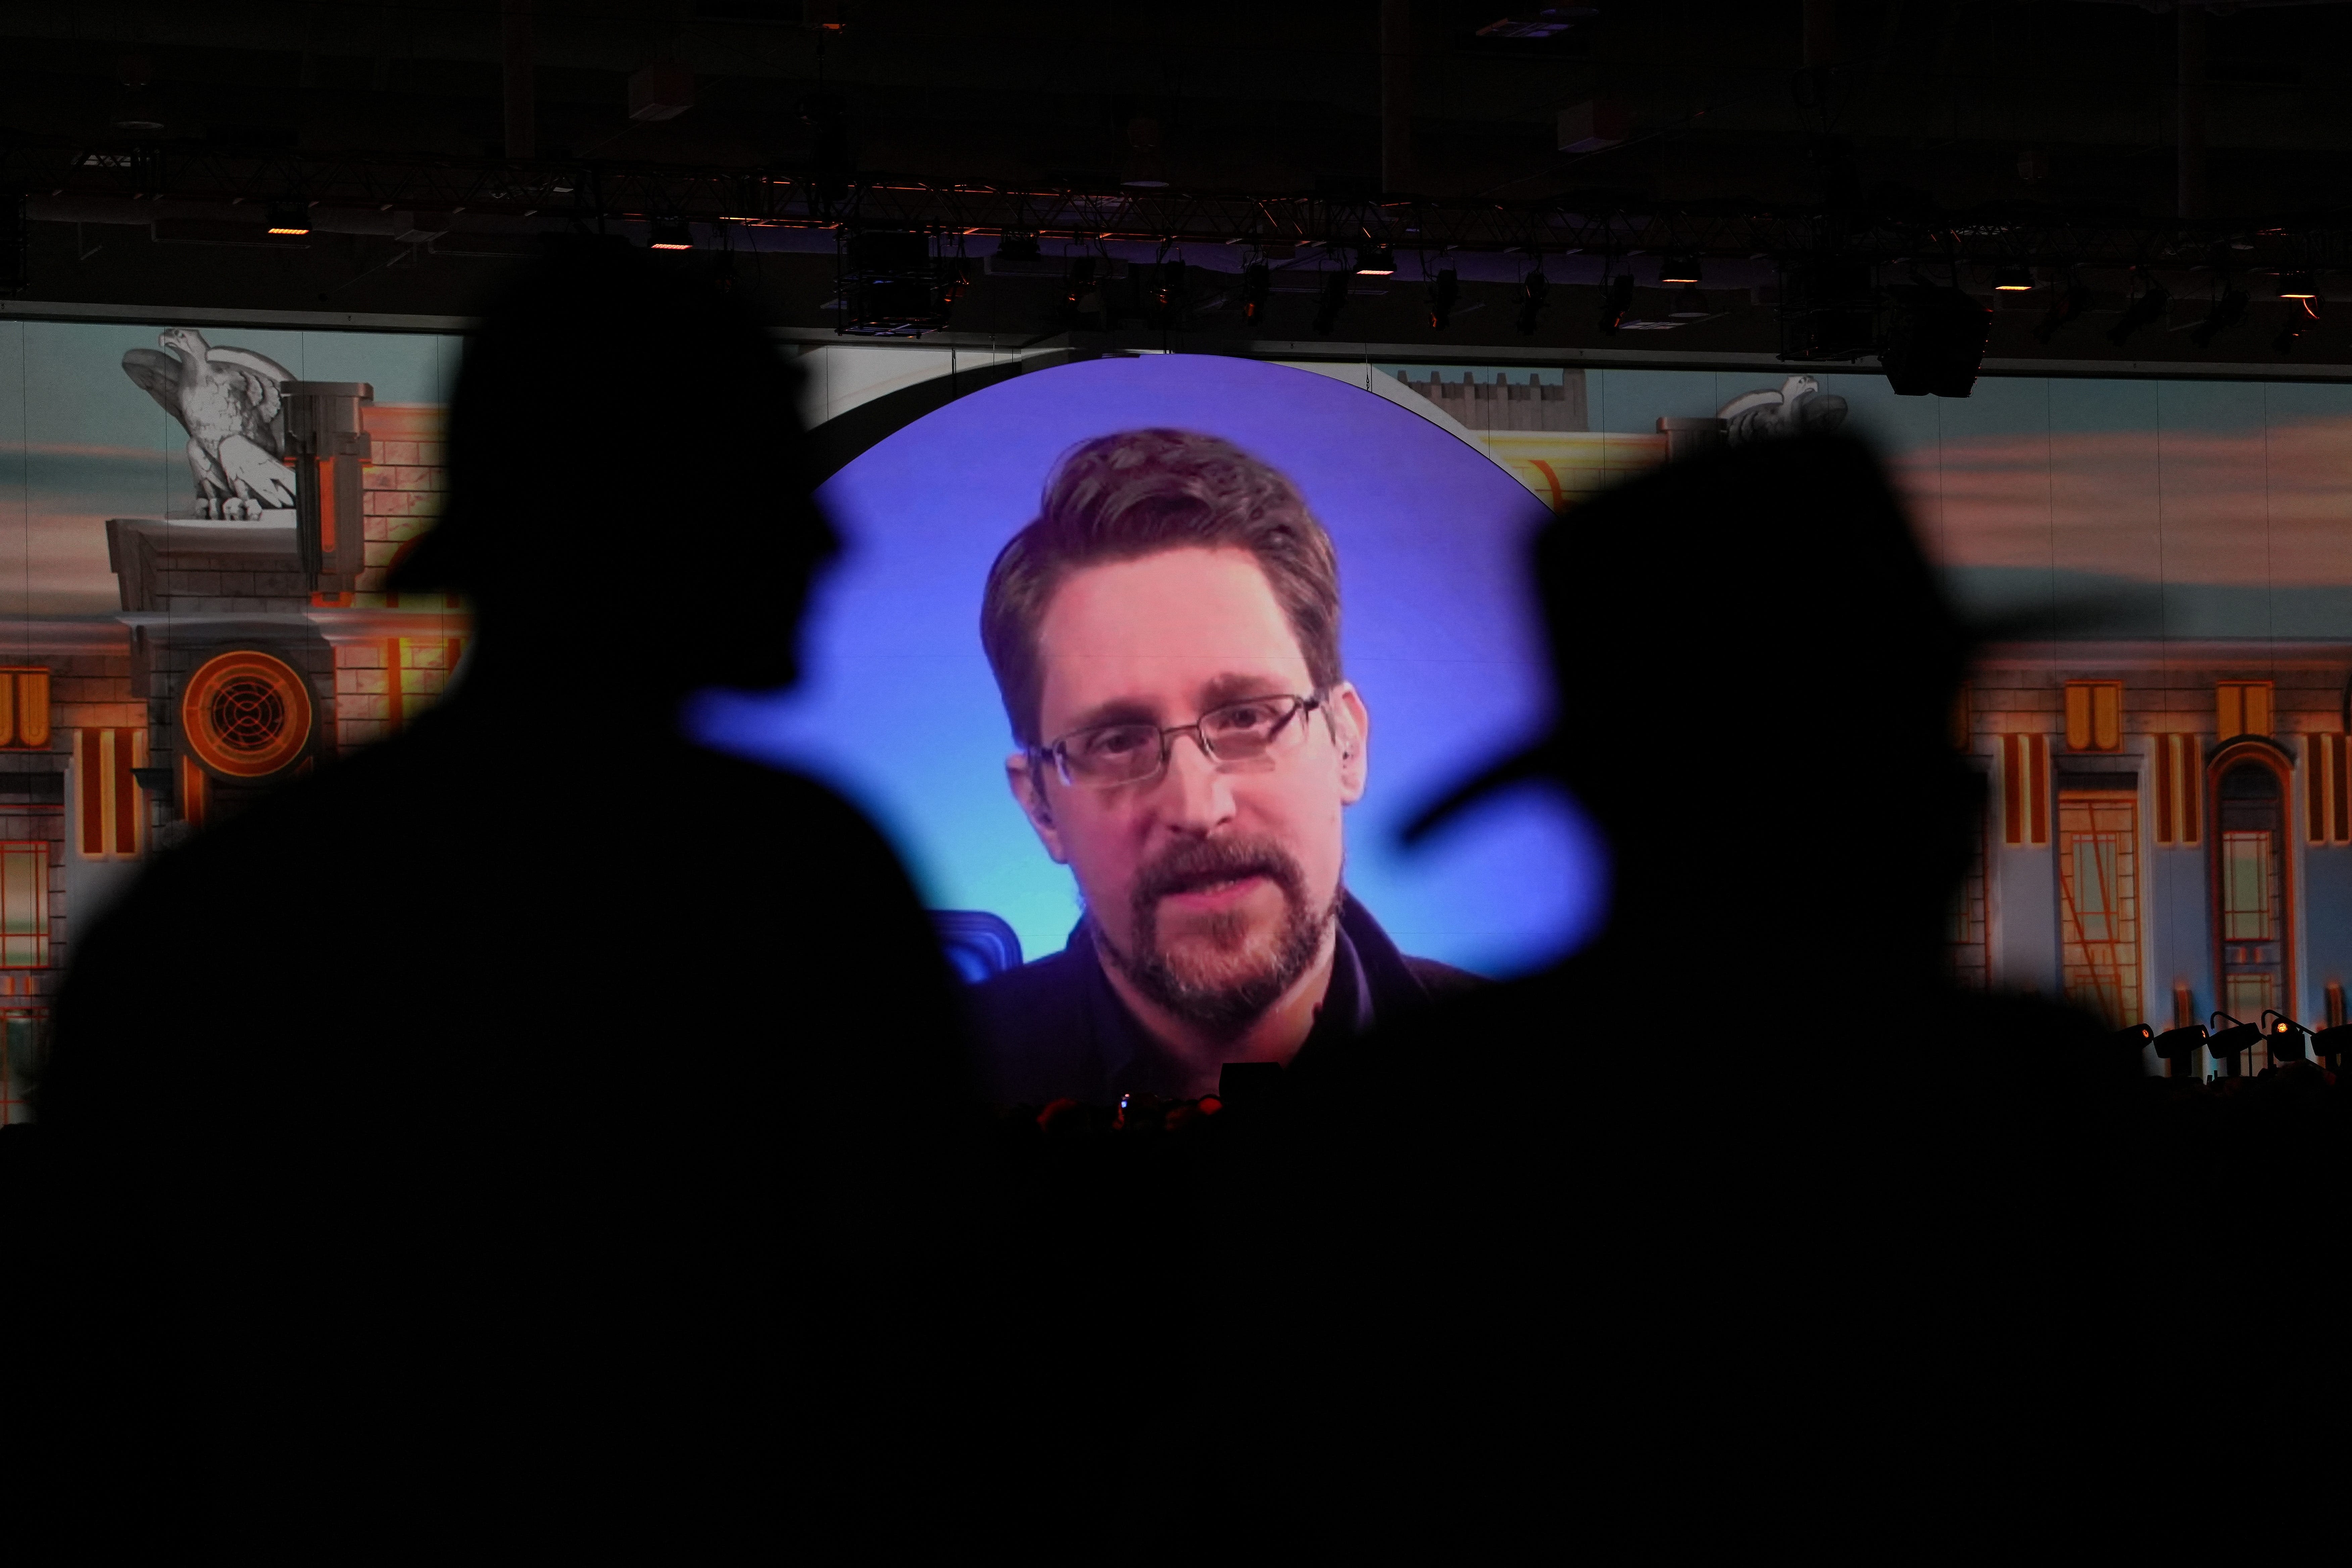 Edward Snowden criticizes political system at Nashville's Bitcoin conference